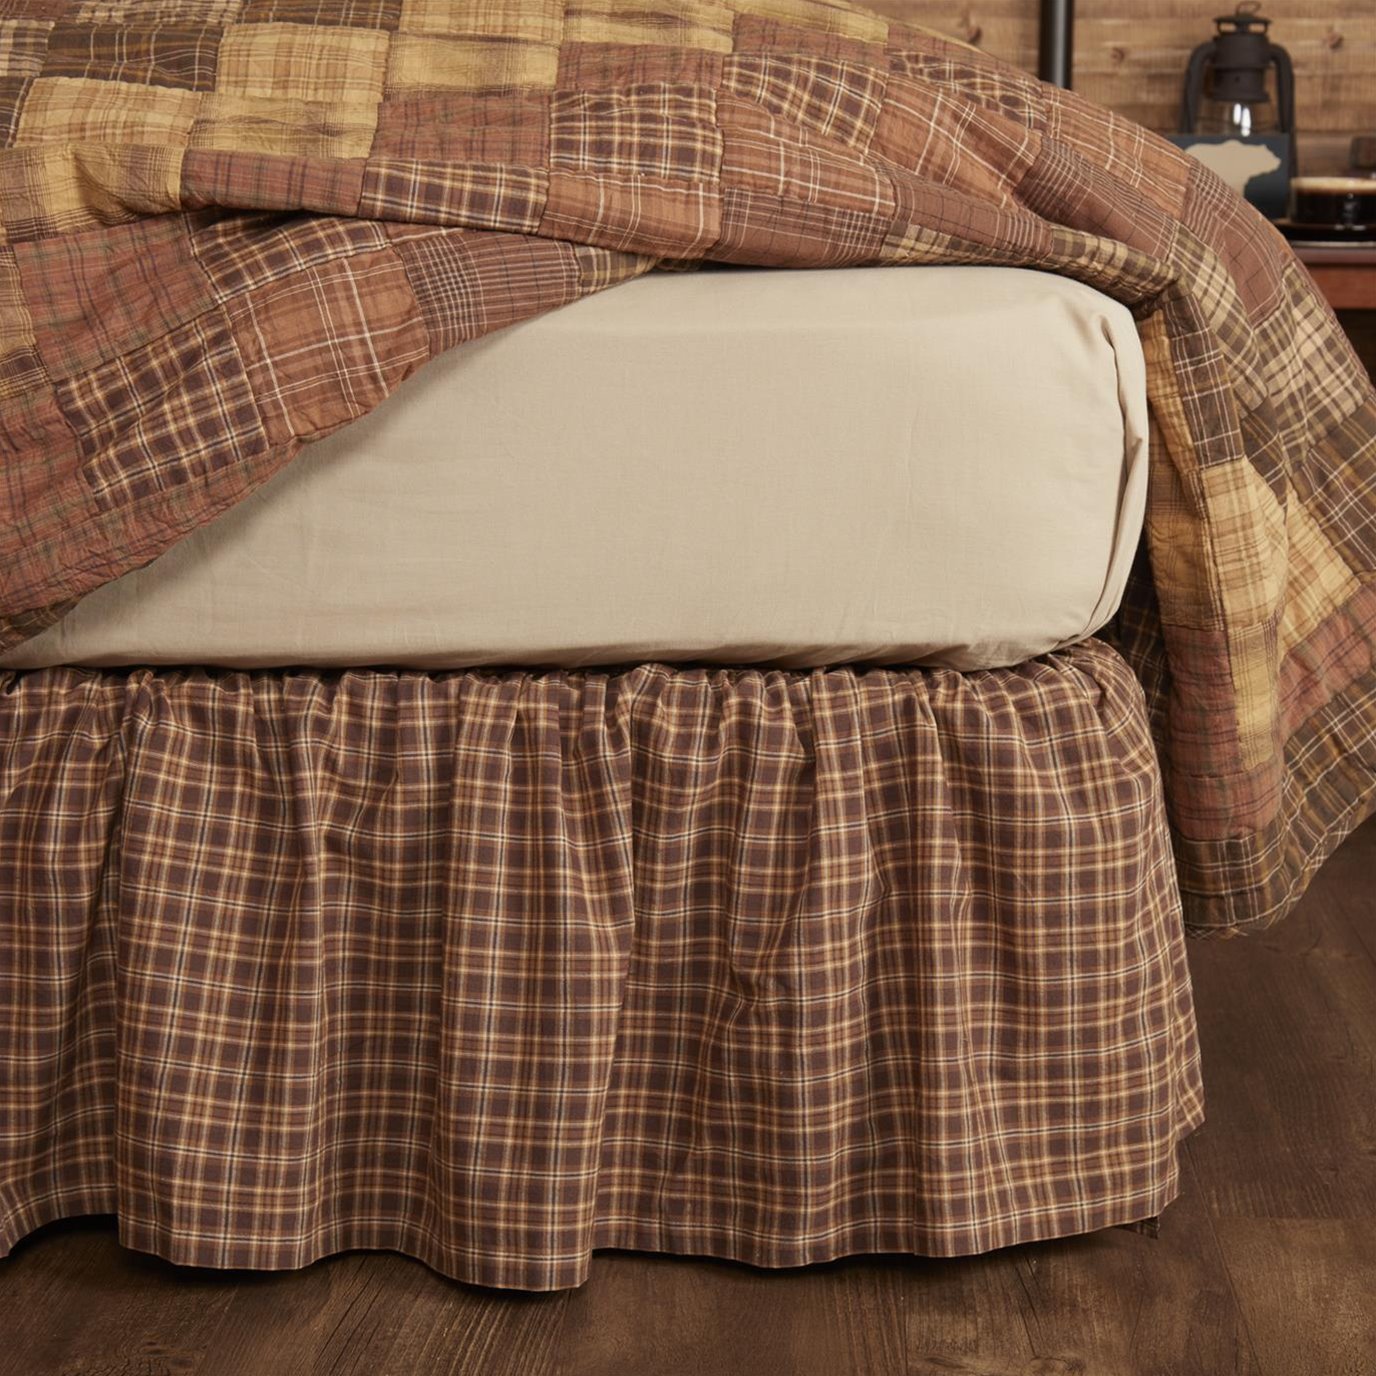 Prescott Queen Bed Skirt 60x80x16